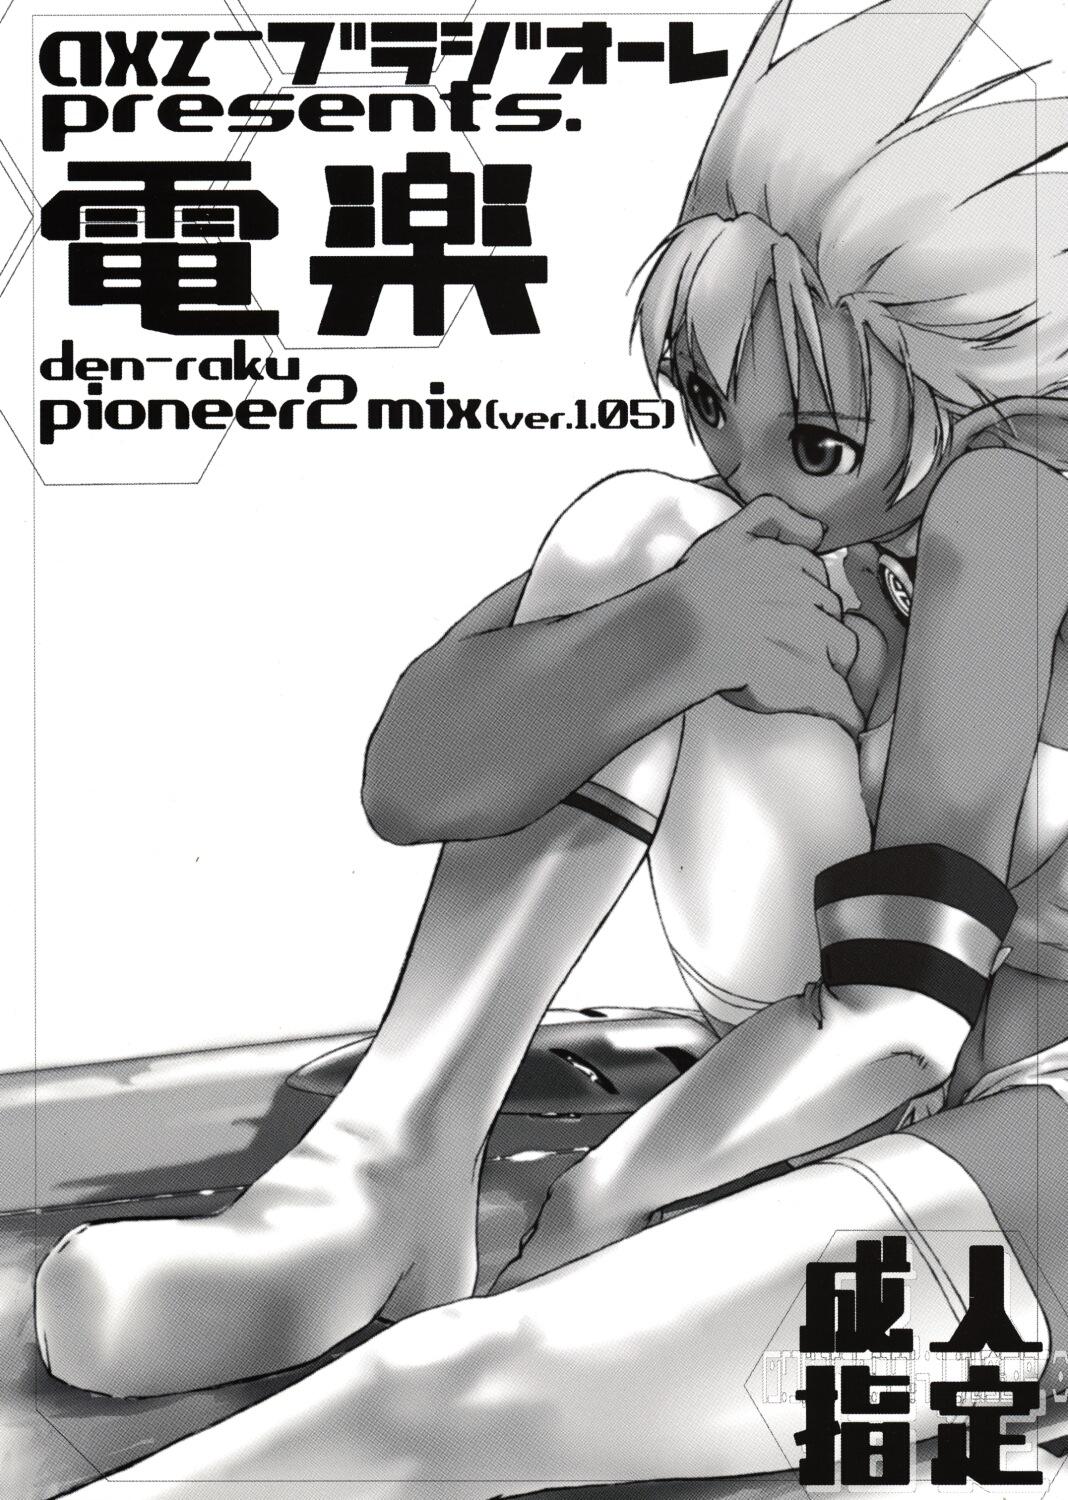 Den-raku PIONEER2 MIX 0